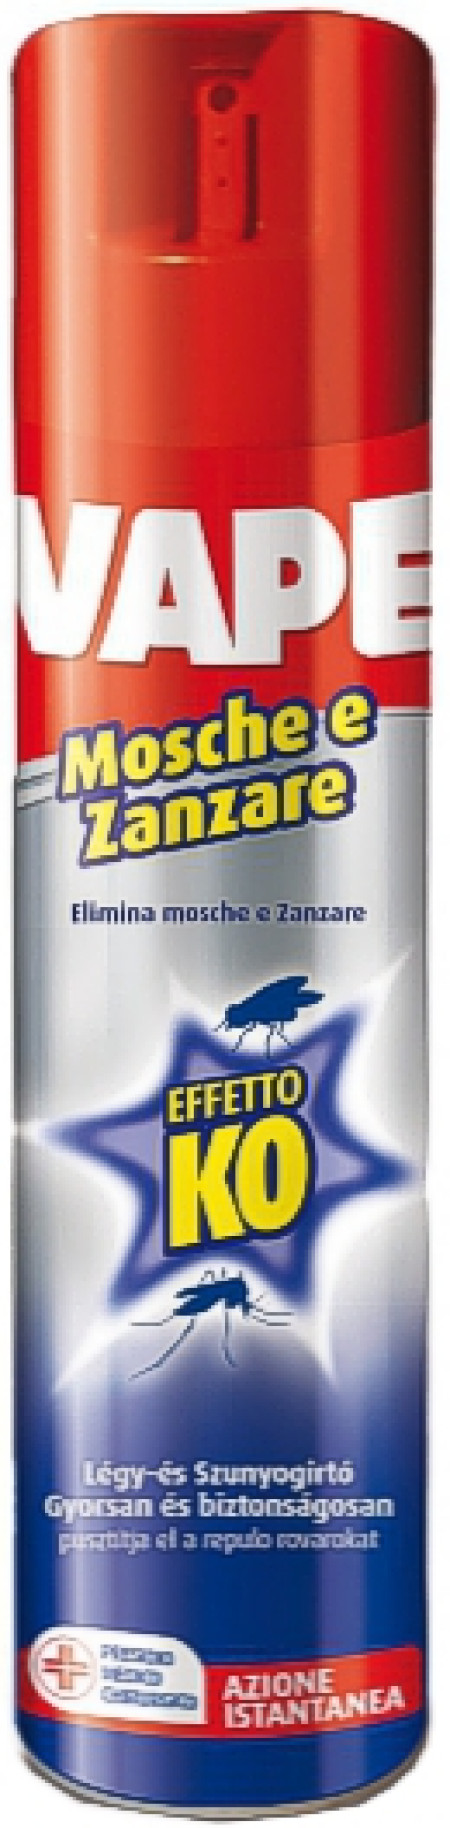 vape mosche e zanzare spray indoor  ml.400 (ex super ko2) ga2016400